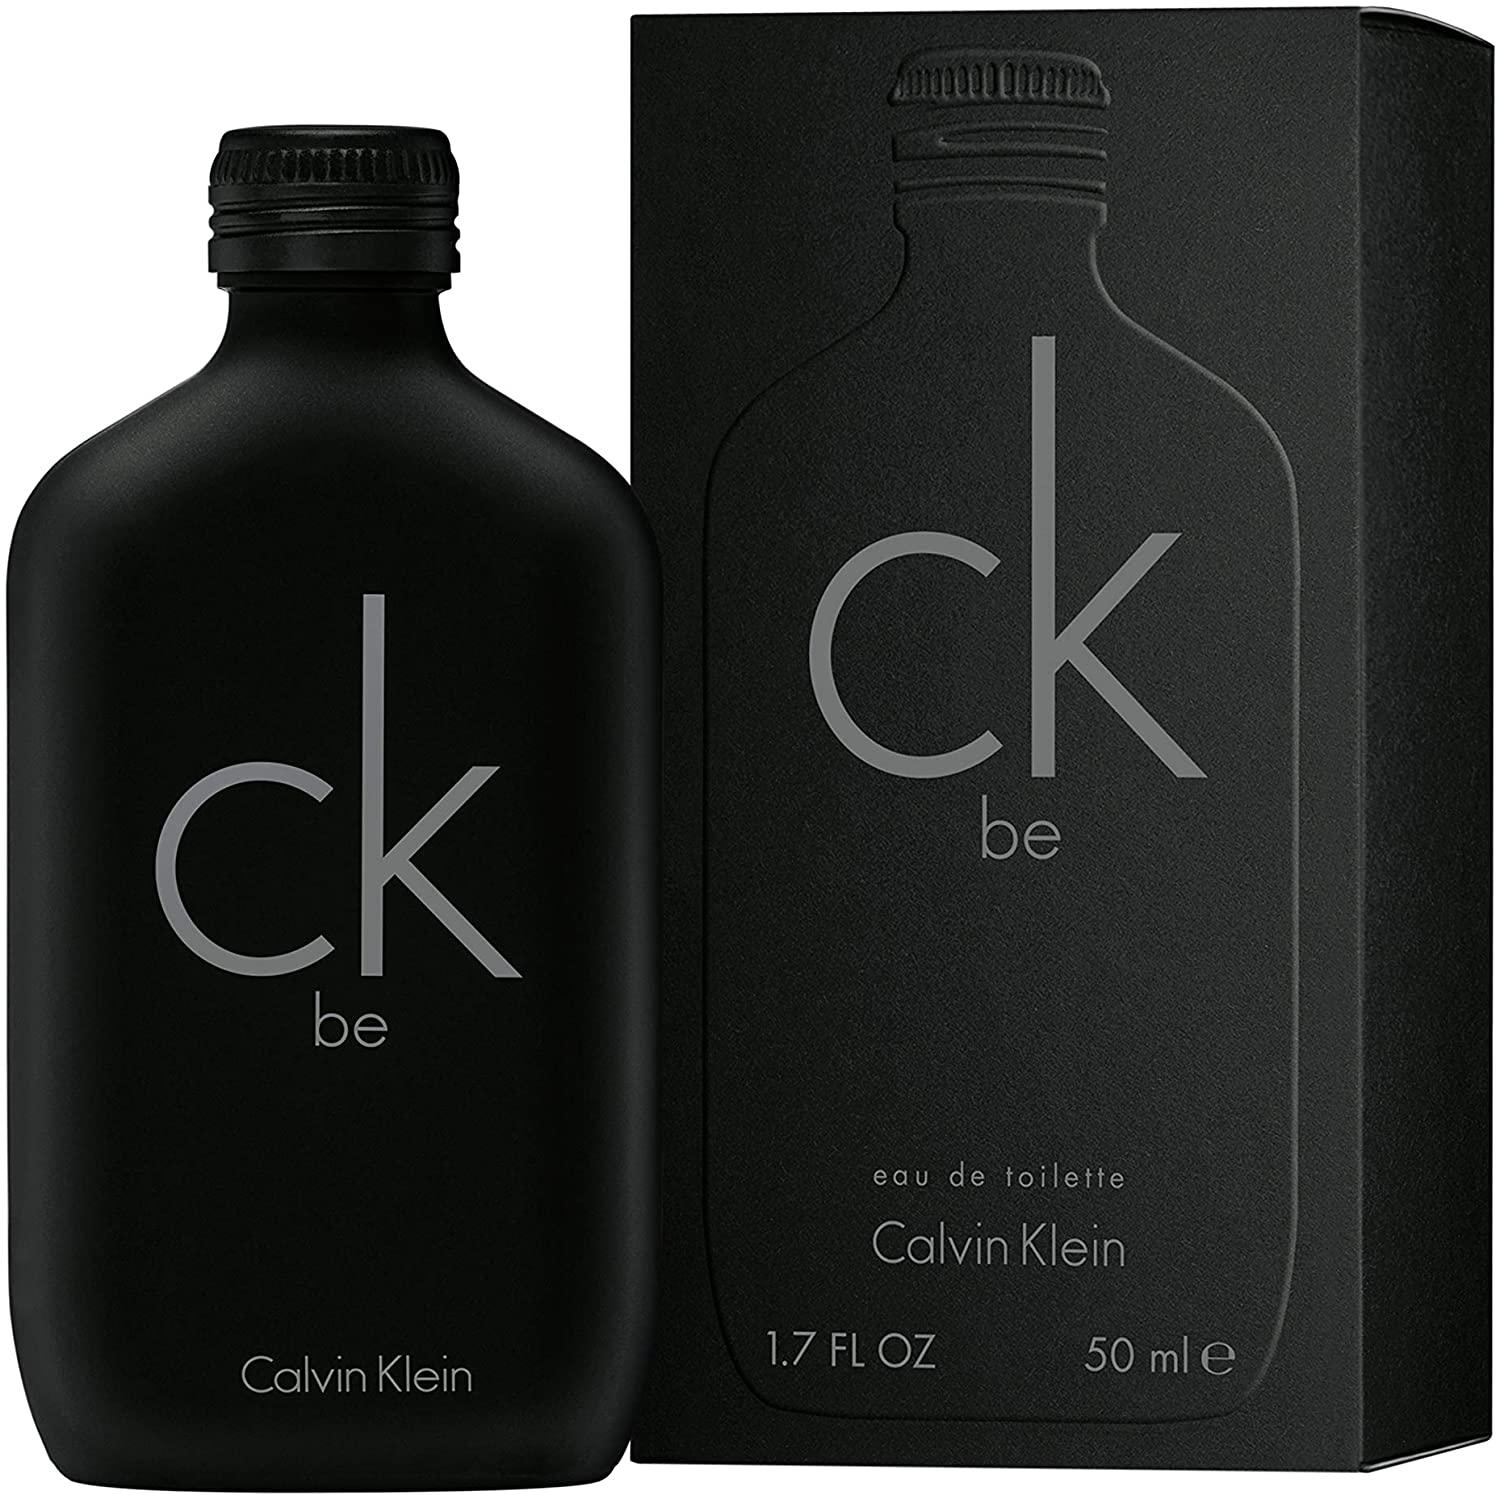 CK be - Parfum Gallerie